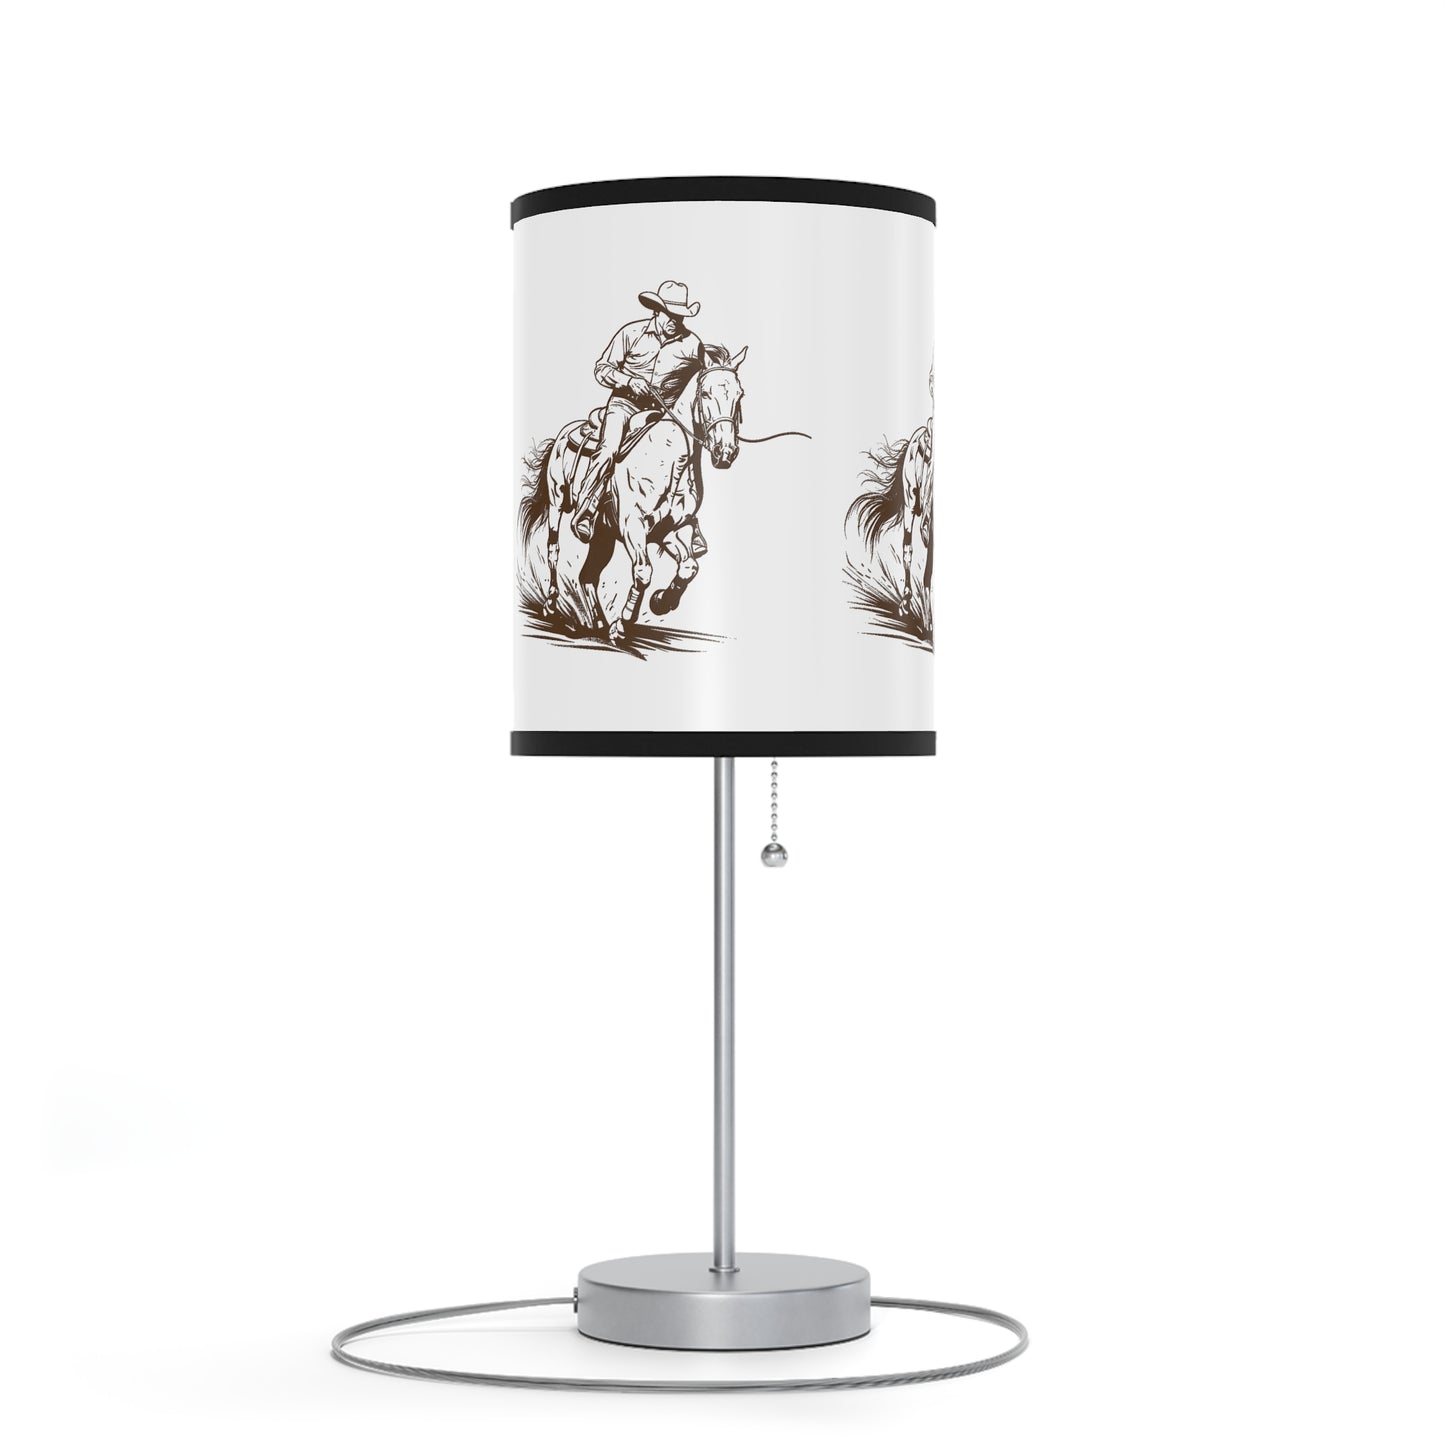 Galloping Cowboy Art Lamp, Horse Art Line Drawing Accent Lamp